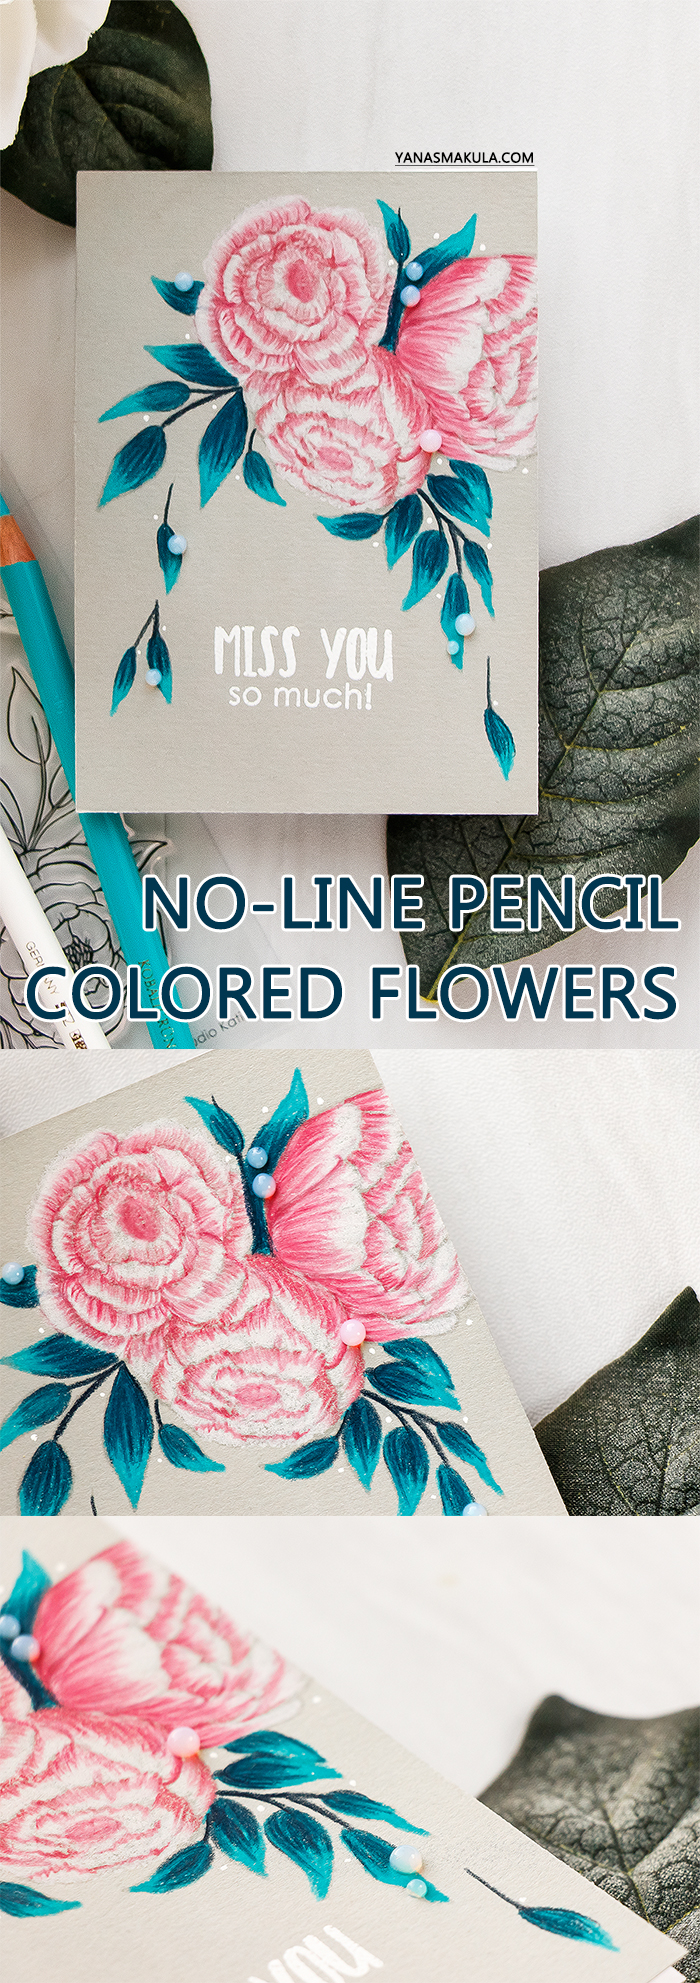 It’s STAMPtember! | Studio Katia Exclusive – Blooming Trio card by Yana Smakula. Polychromos pencils colored peonies.